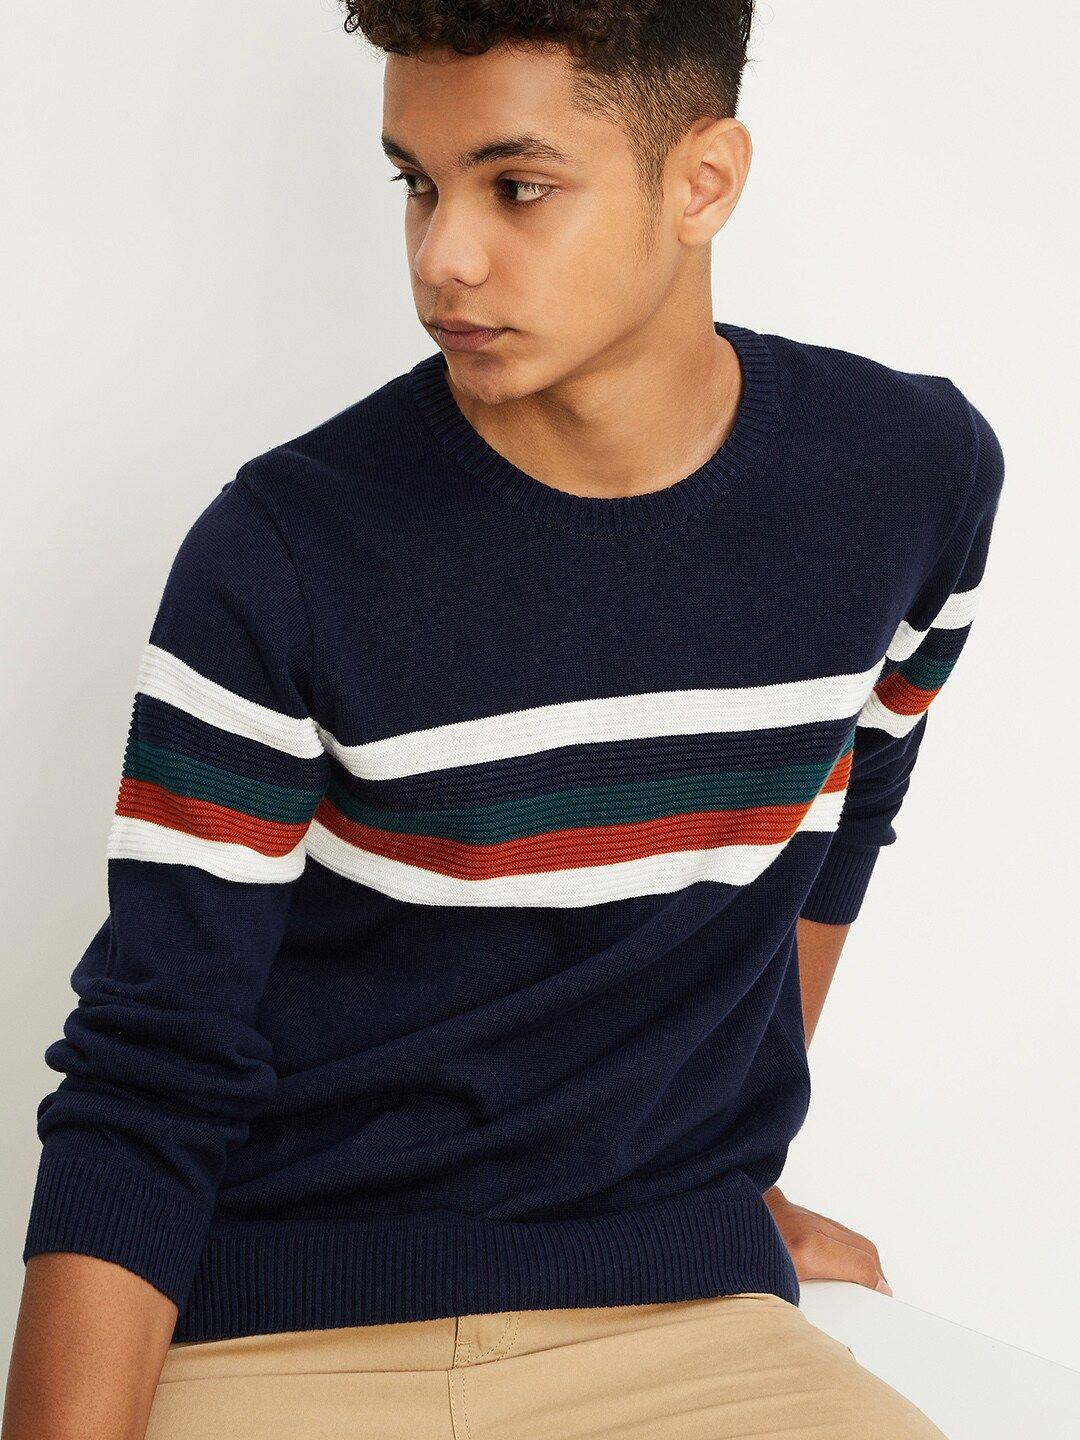 max-boys-navy-blue-&-white-striped-pullover